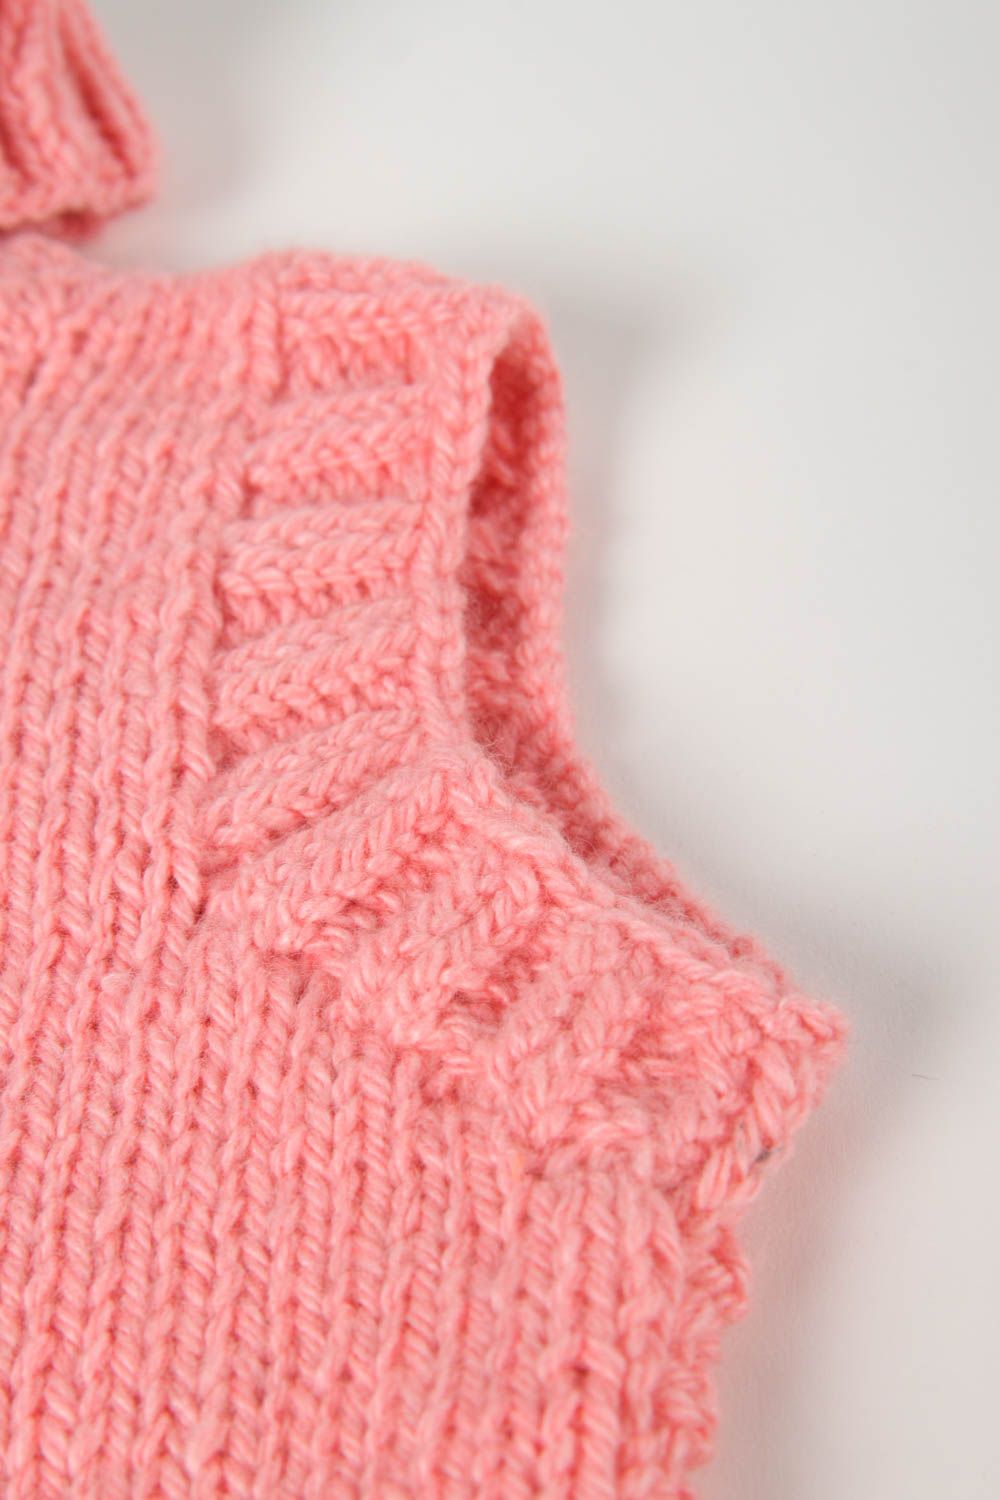 Handmade scarf pink vest knitted winter set designer warm clothes for girl photo 5